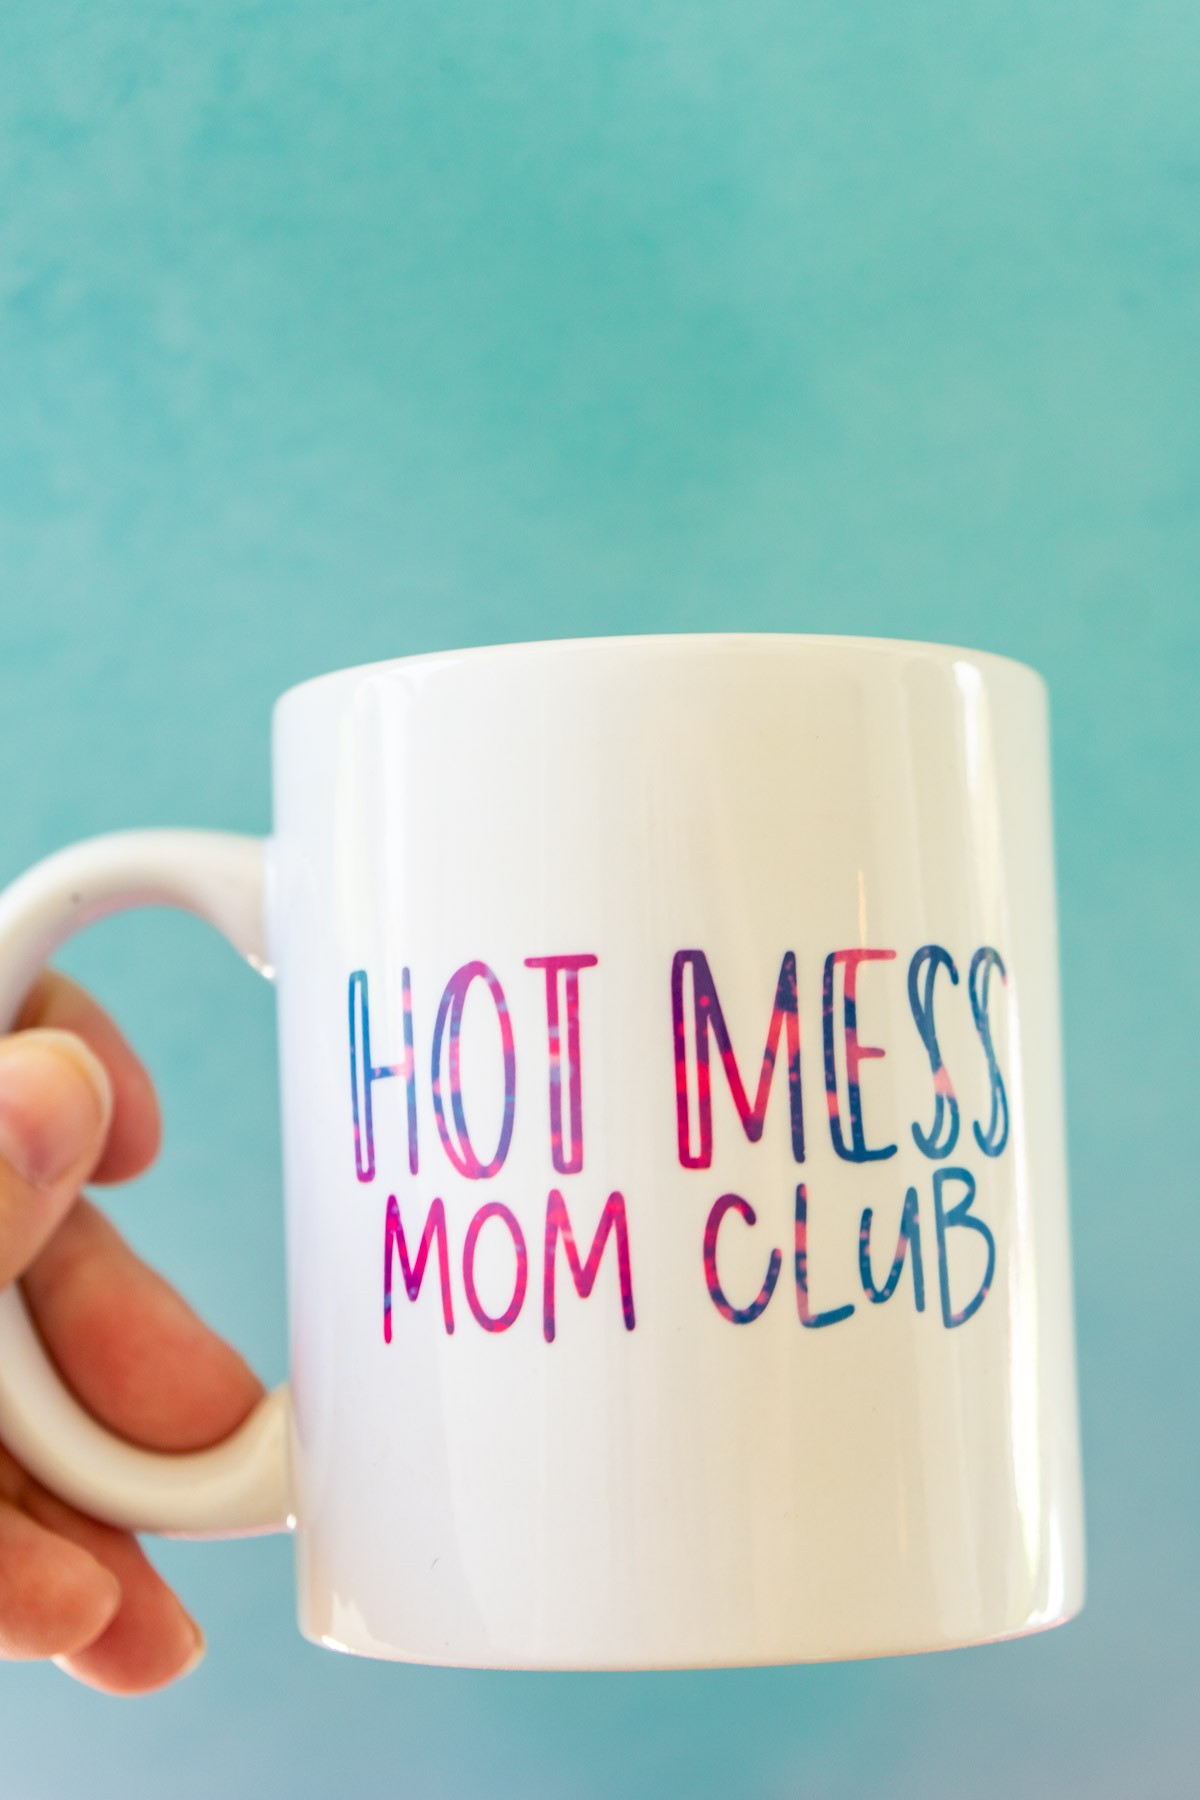 Mug design ideas - Personalizing a coffee mug with transfer decal